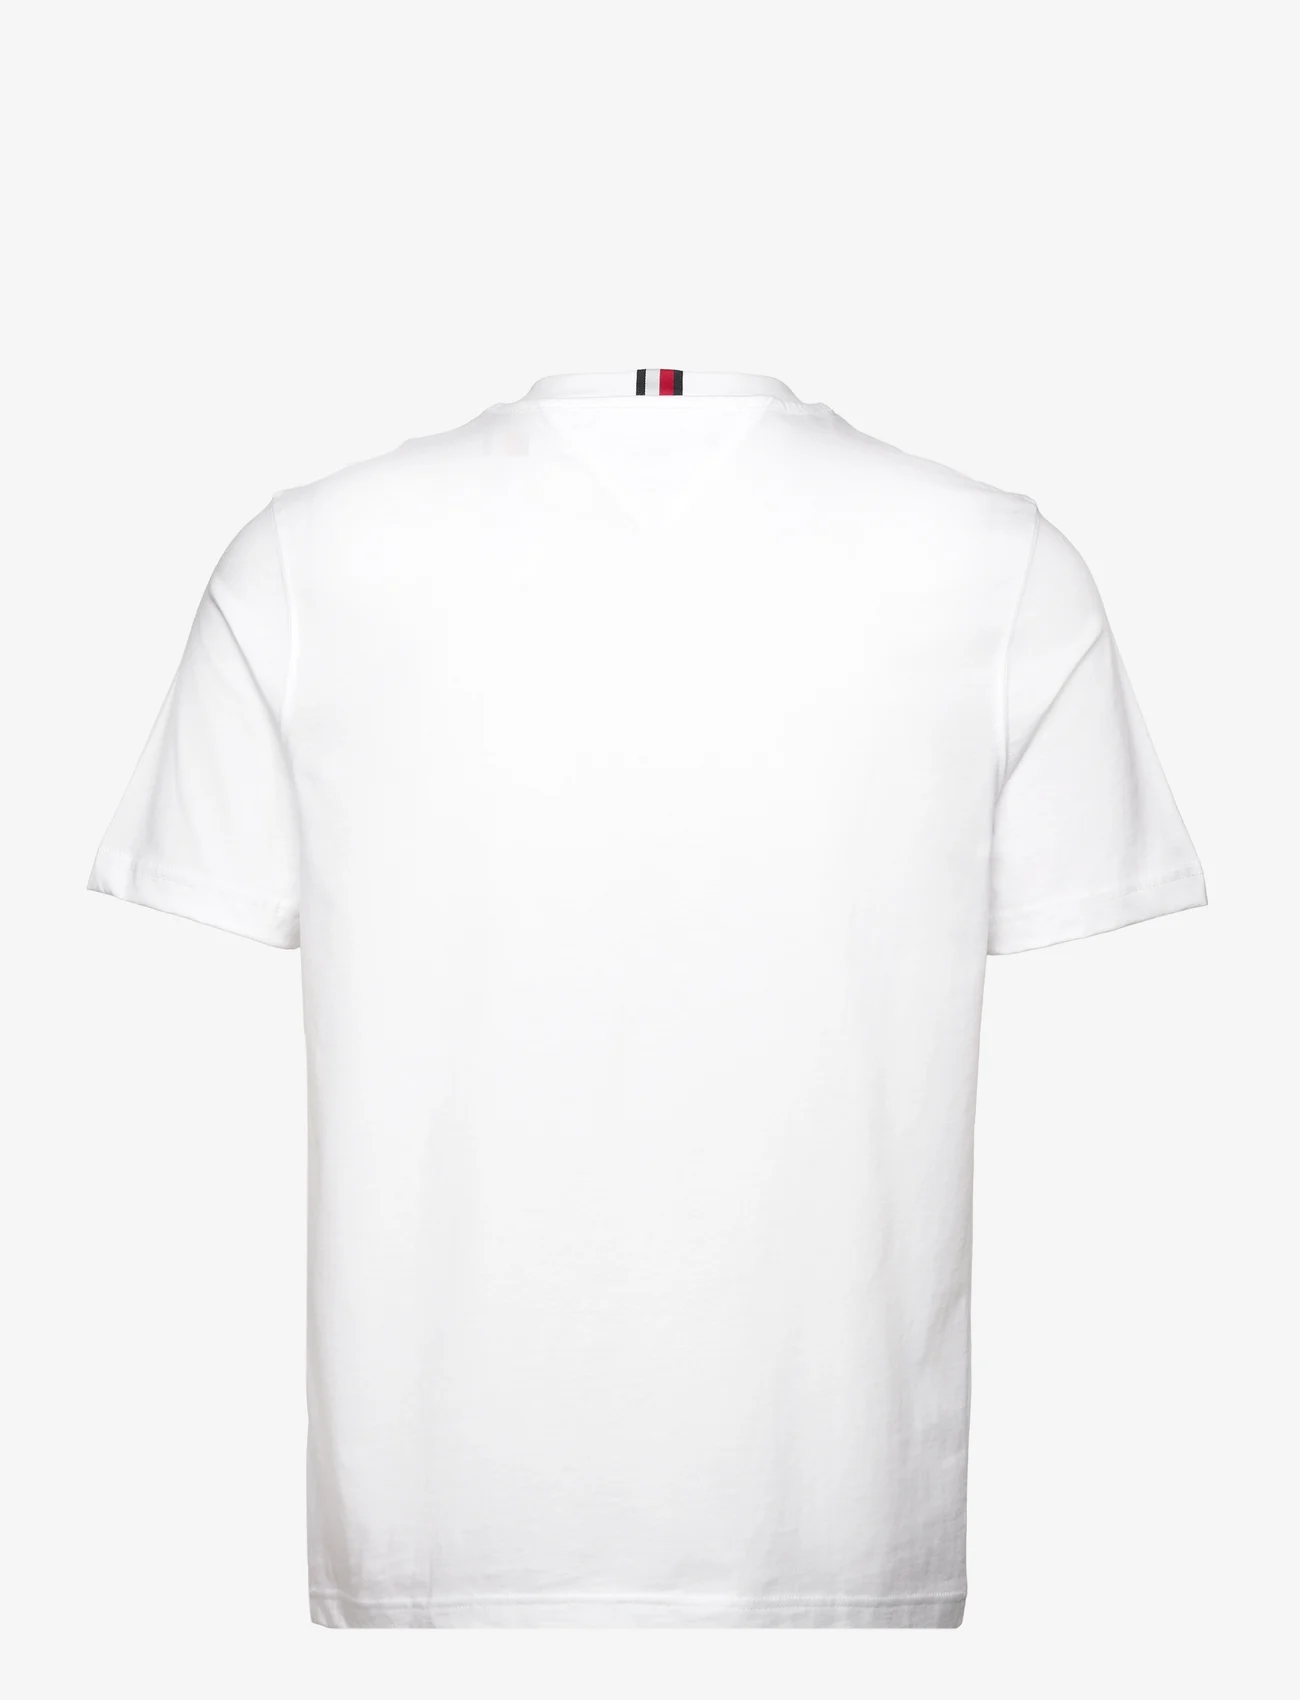 Tommy Hilfiger - VARSITY H TEE - kortärmade t-shirts - white - 1